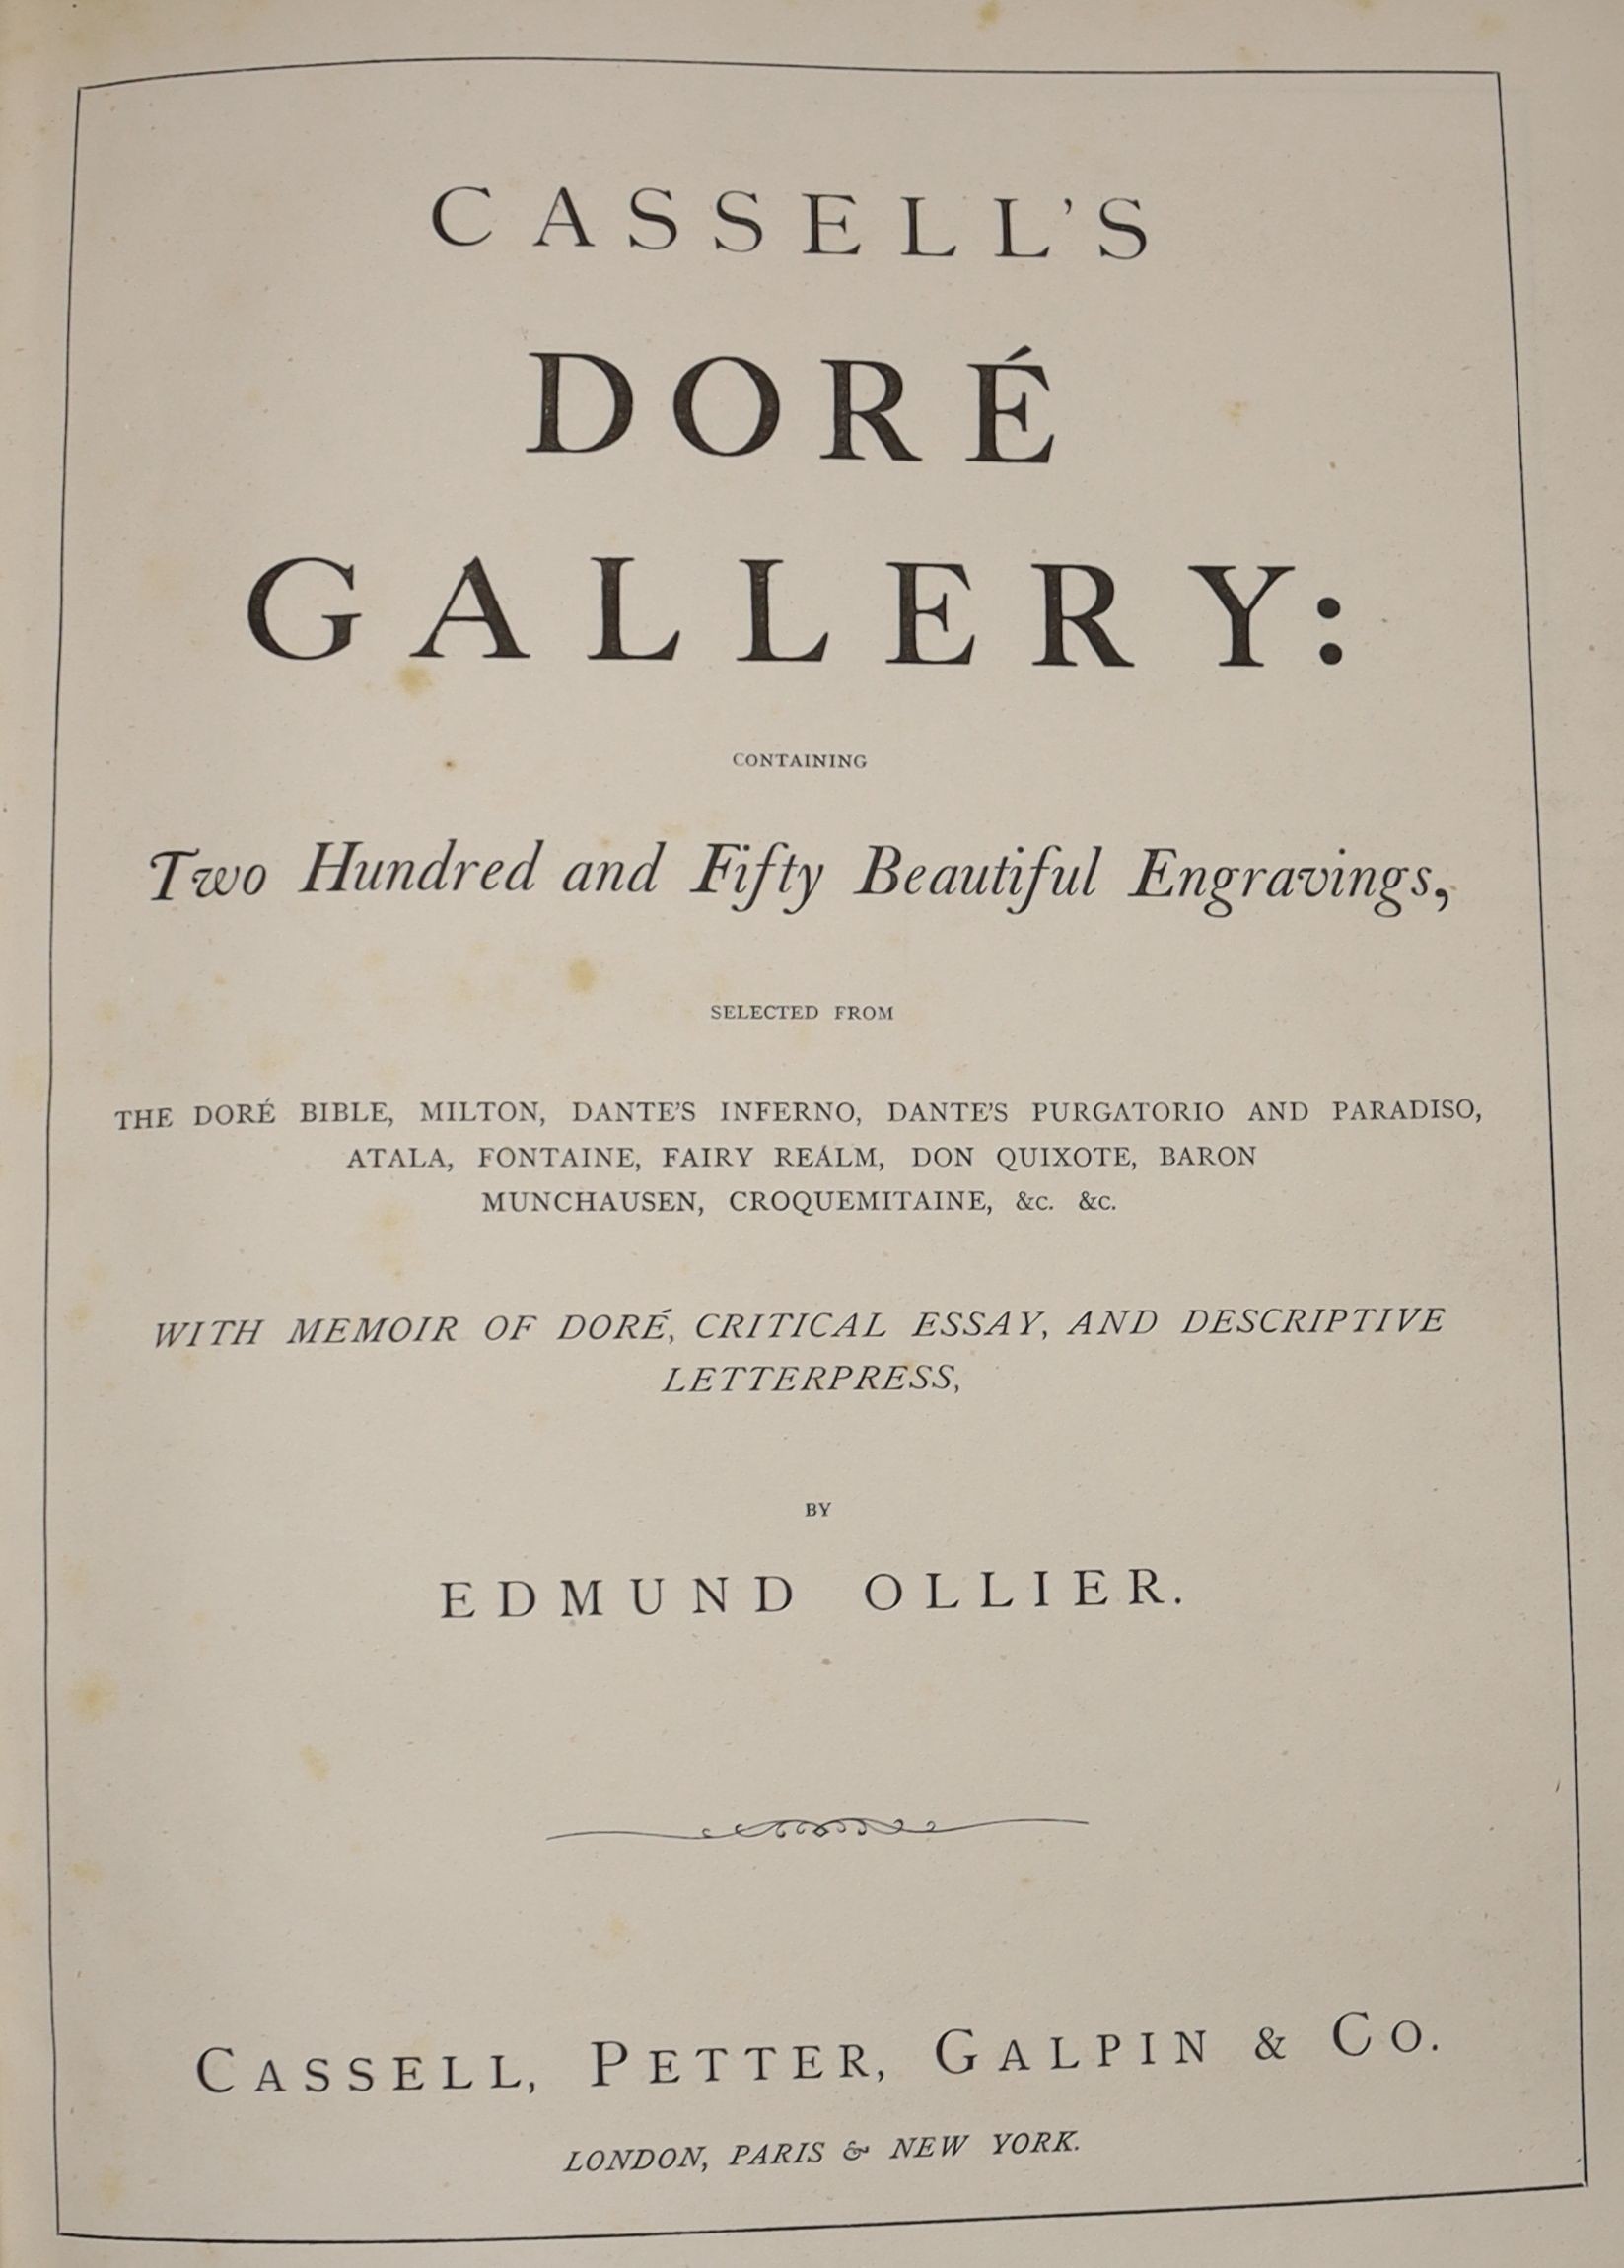 Cassell’s Doré Gallery by Edmund Ollier - one volume